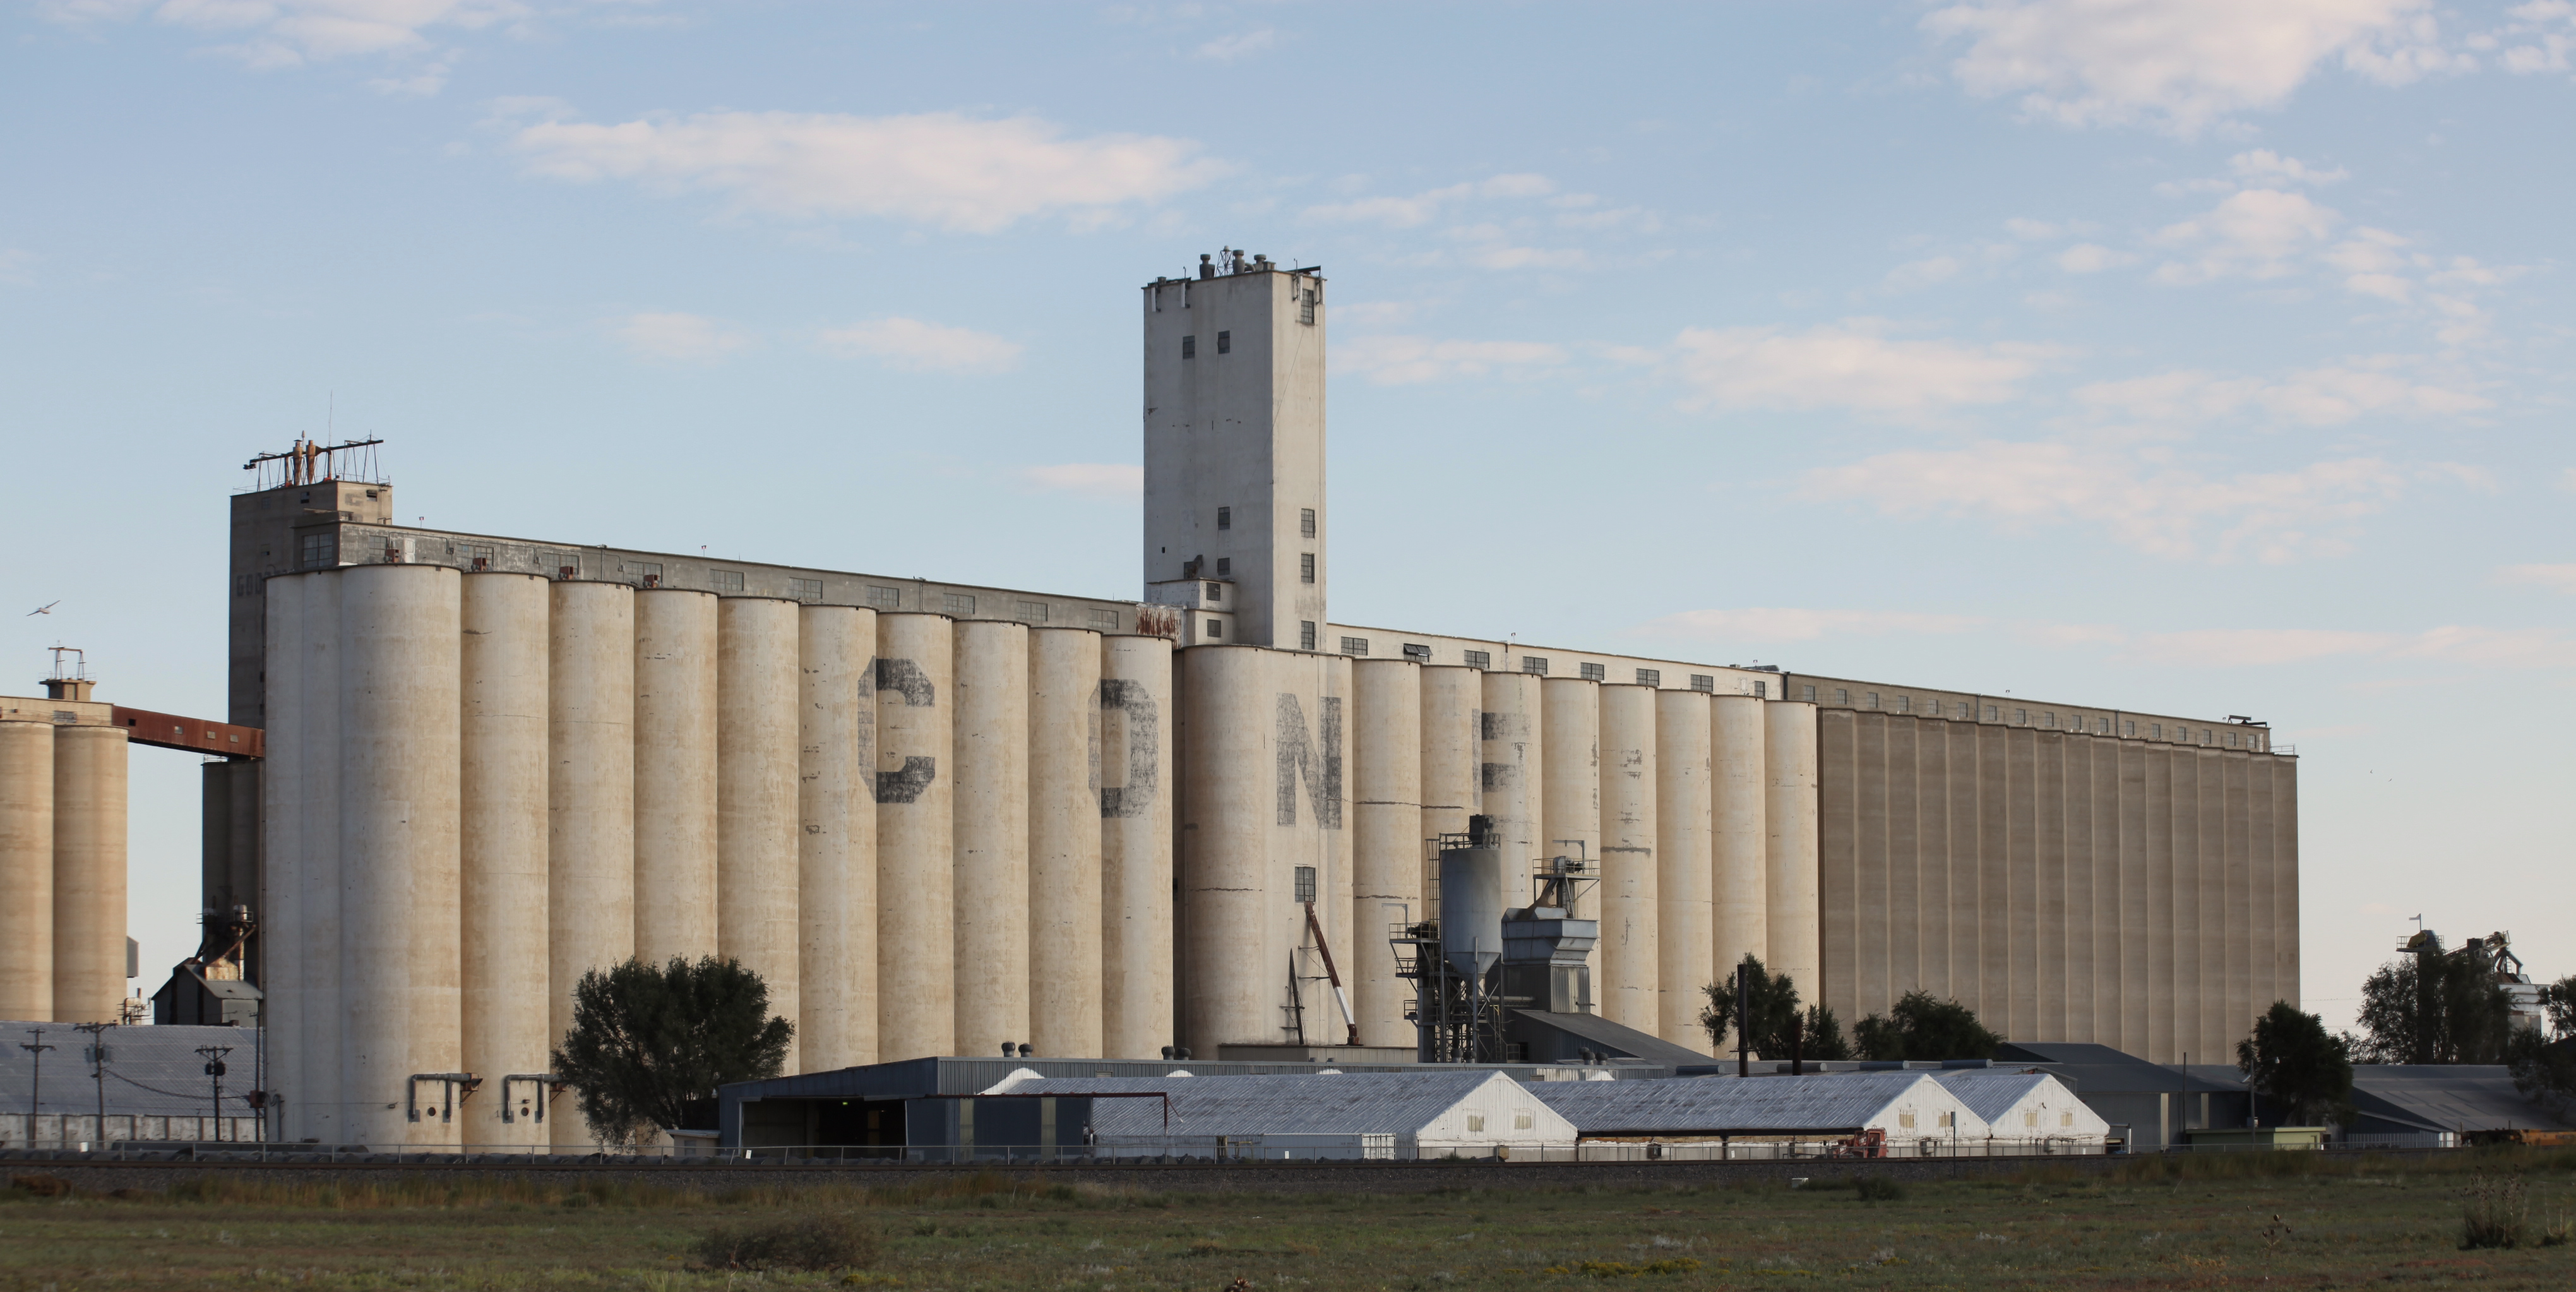 File:Lubbock Texas Cone Grain Elevator 2010.jpg - Wikimedia Commons